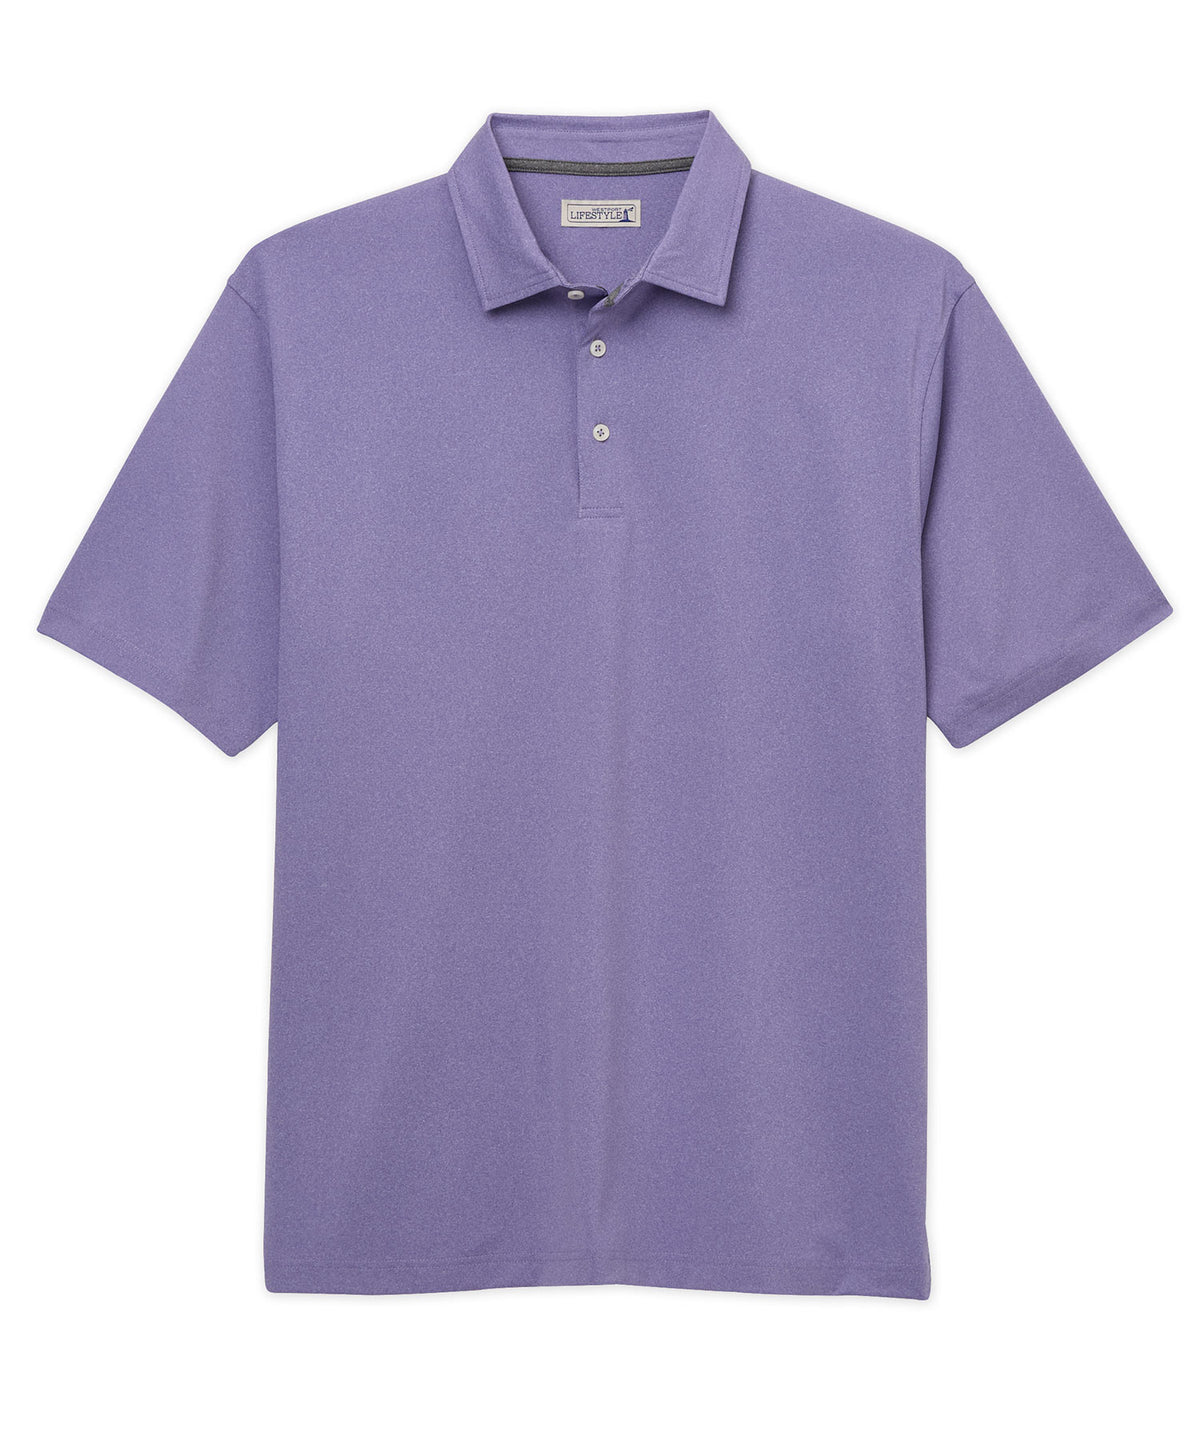 Westport Lifestyle Short Sleeve Performance Polo Knit Shirt, Men's Big & Tall